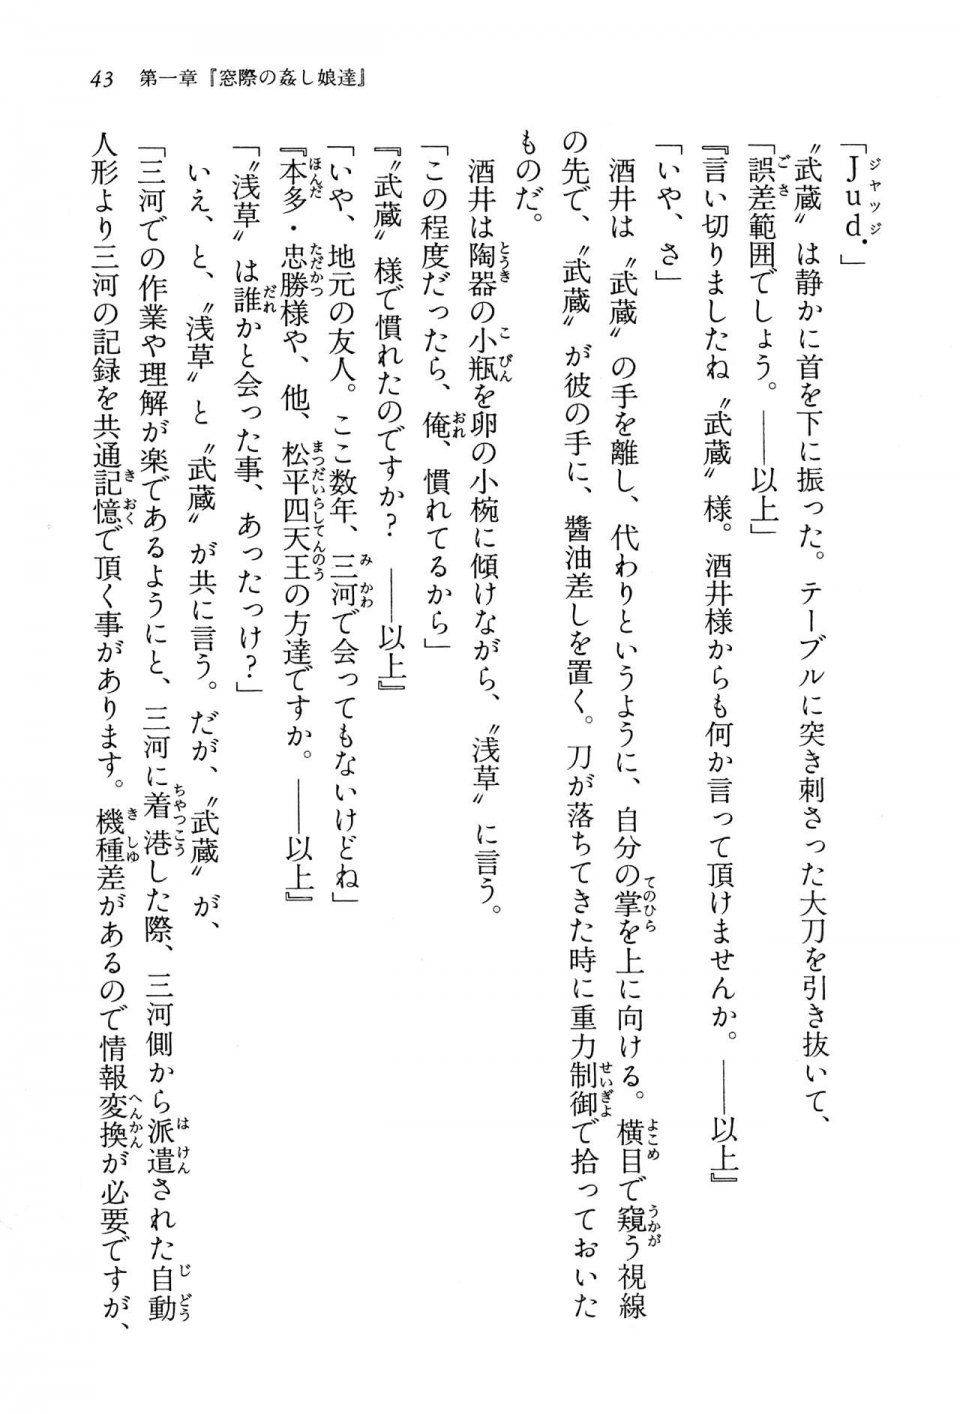 Kyoukai Senjou no Horizon BD Special Mininovel Vol 5(3A) - Photo #47